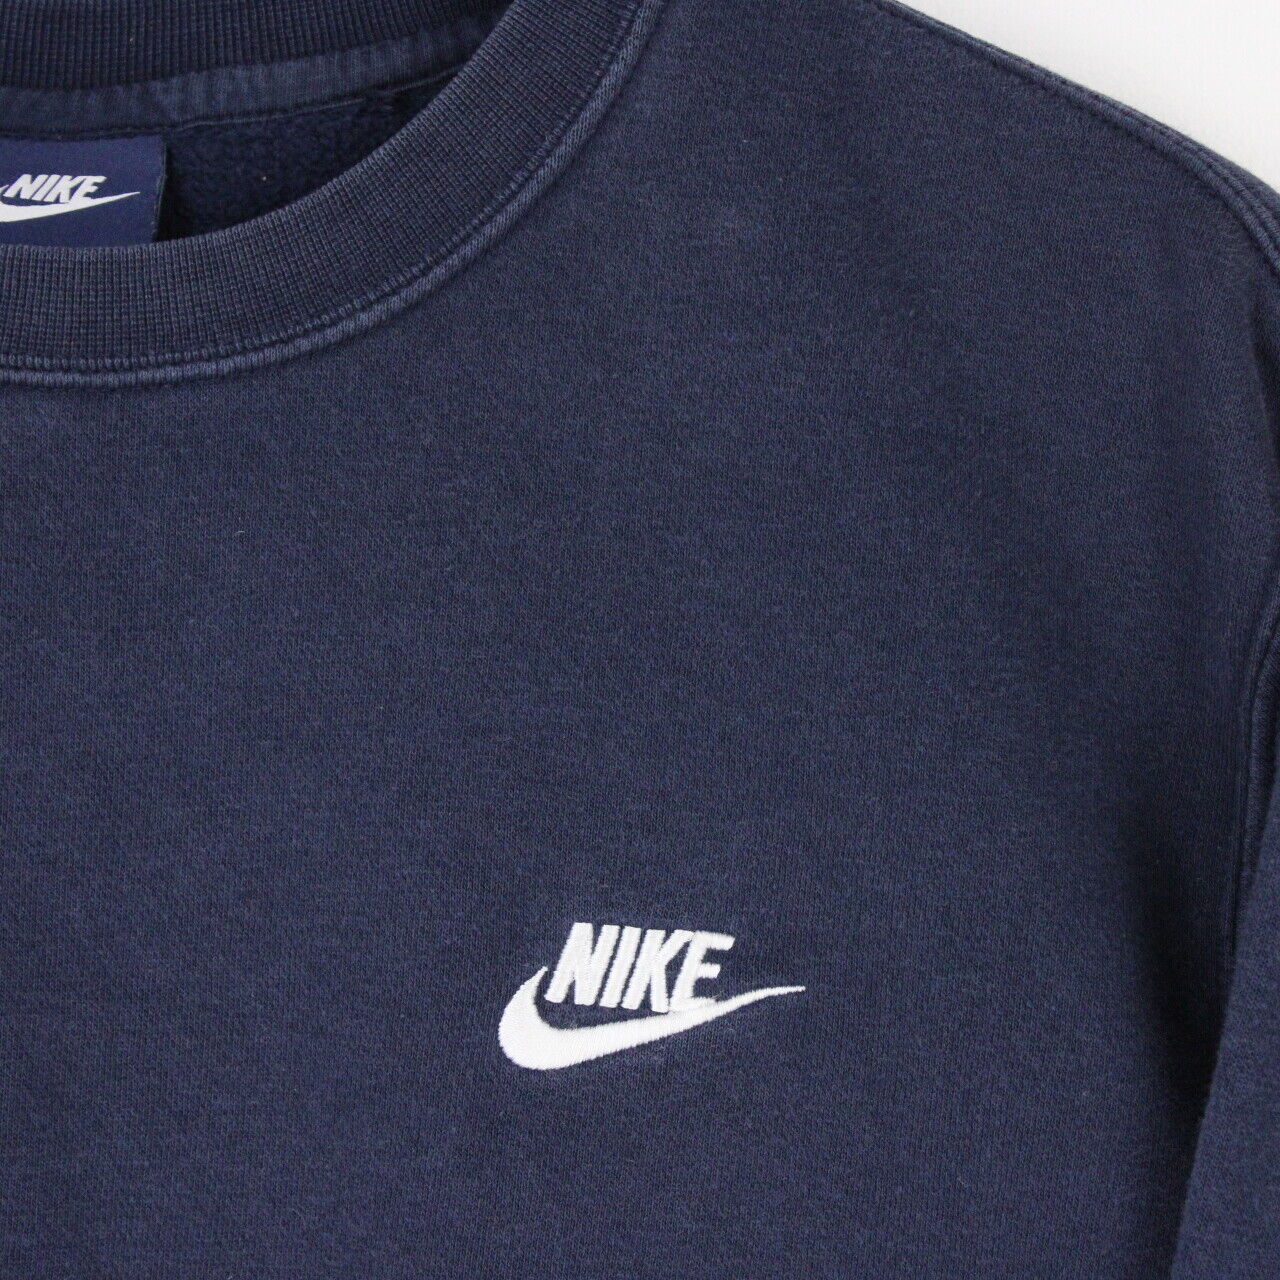 NIKE Sweatshirt Navy Blue | Medium